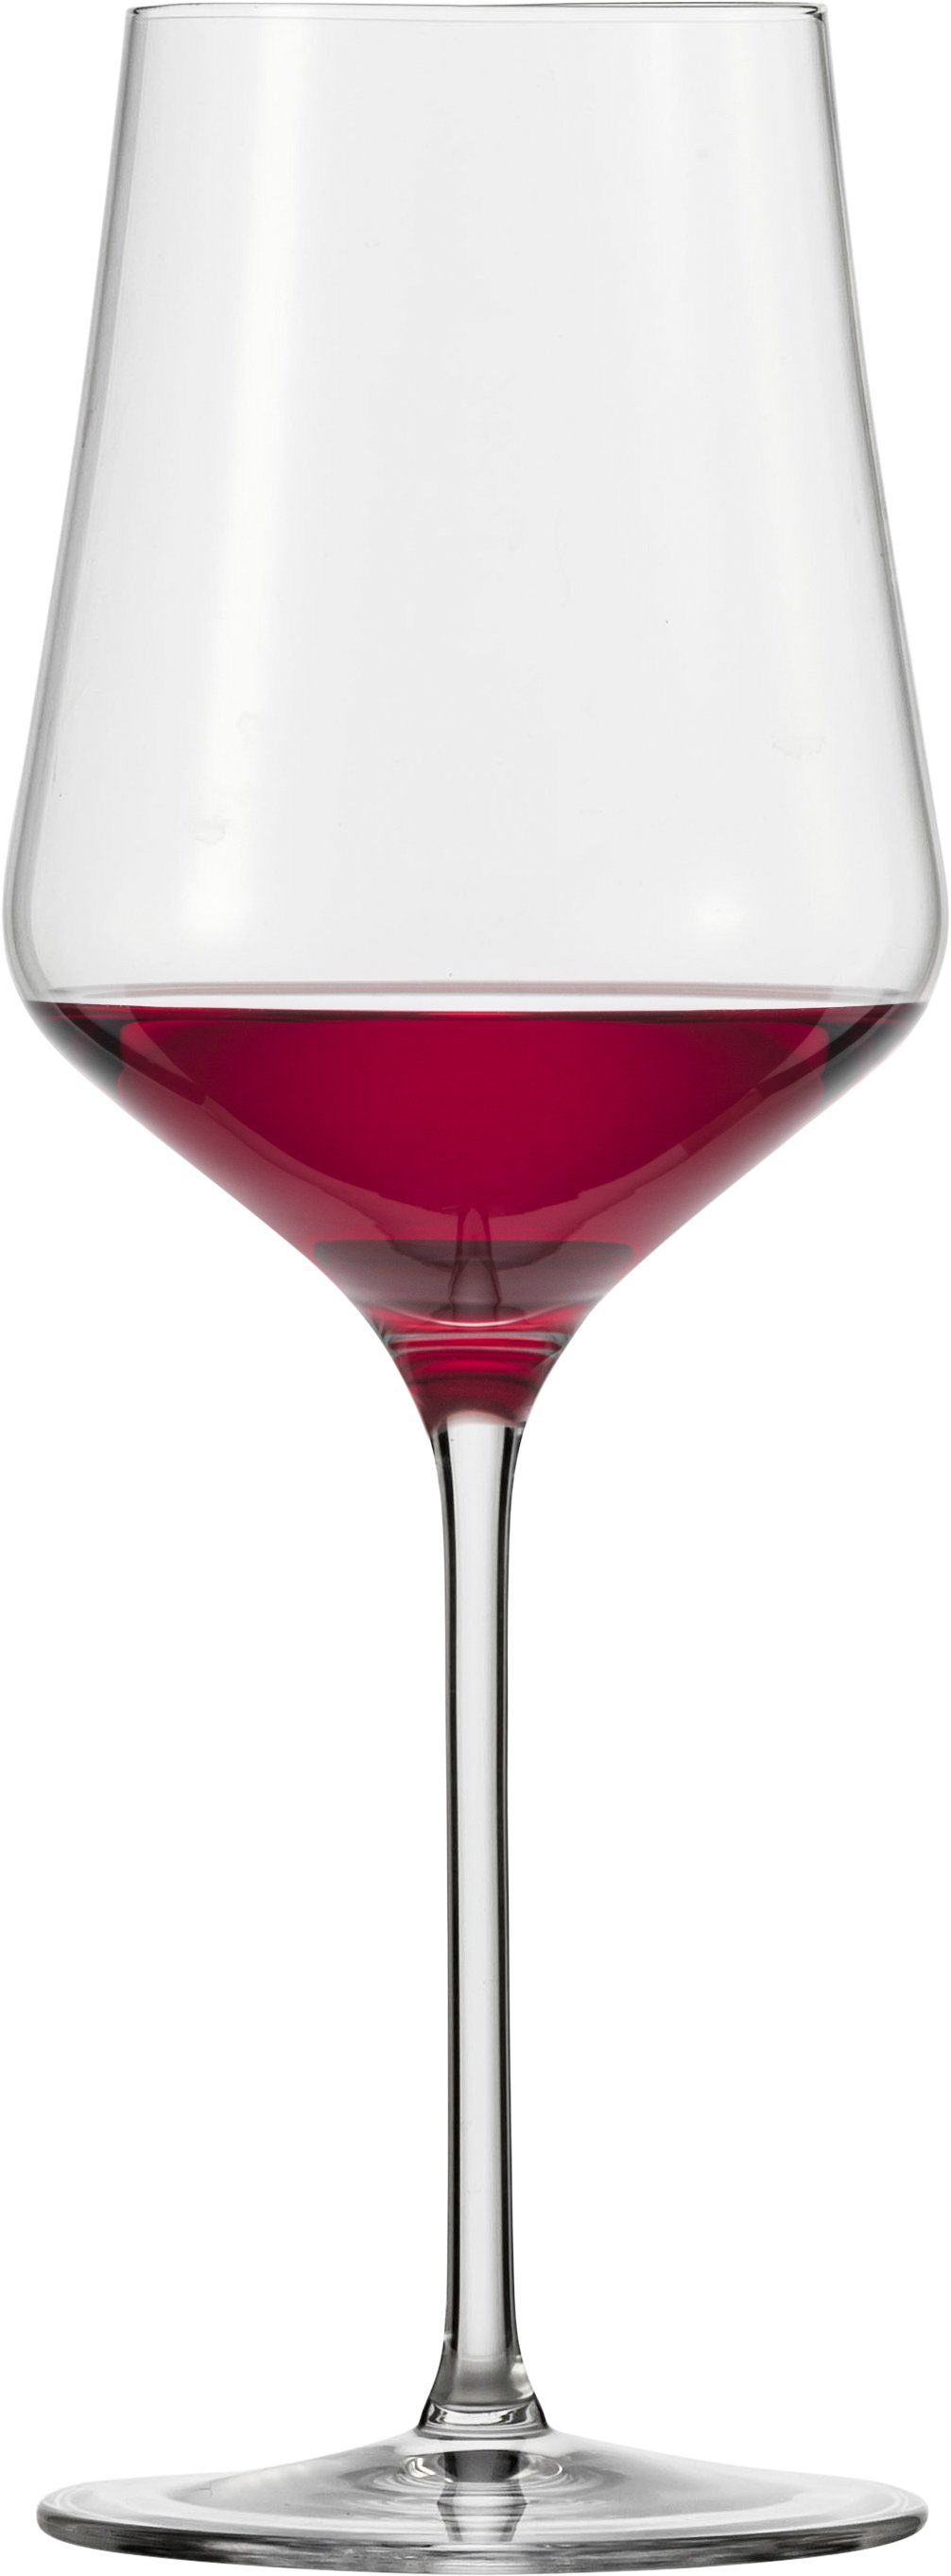 Eisch Rotweinglas Sky SensisPlus, Kristallglas, bleifrei, 490 ml, 4-teilig